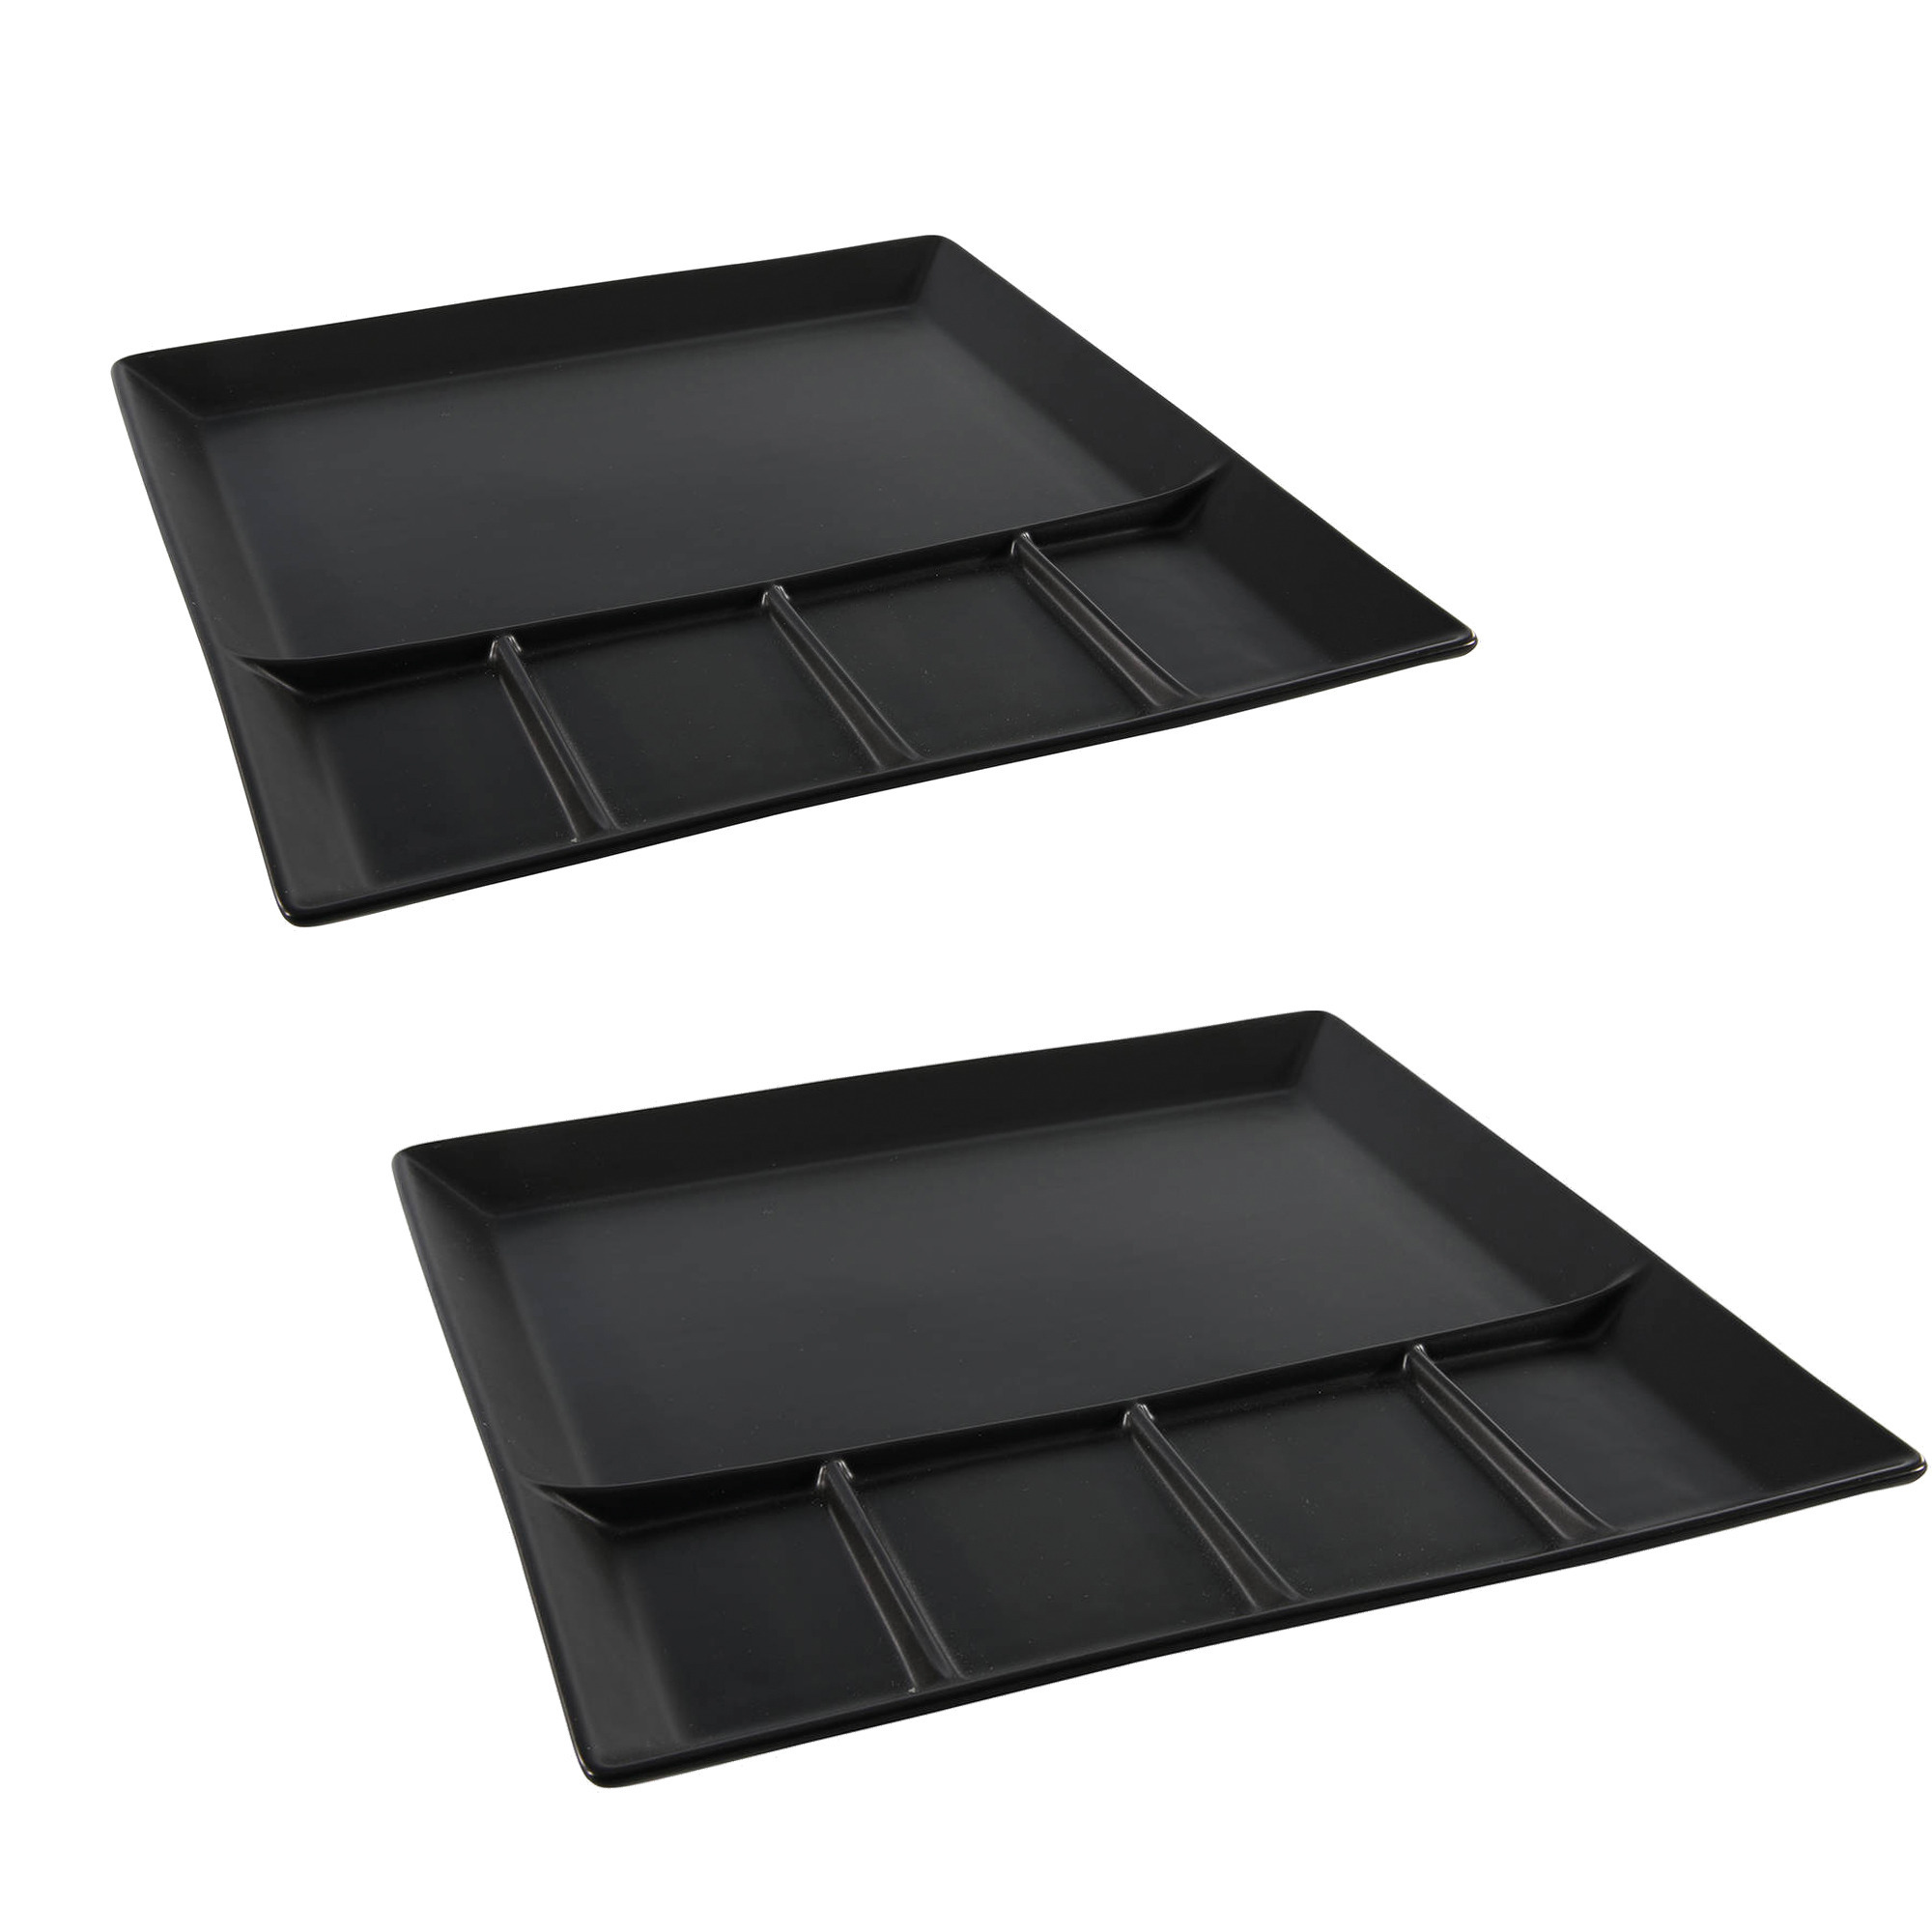 6x stuks mat zwart fondue-gourmet bord 5-vaks vierkant aardewerk 24 cm